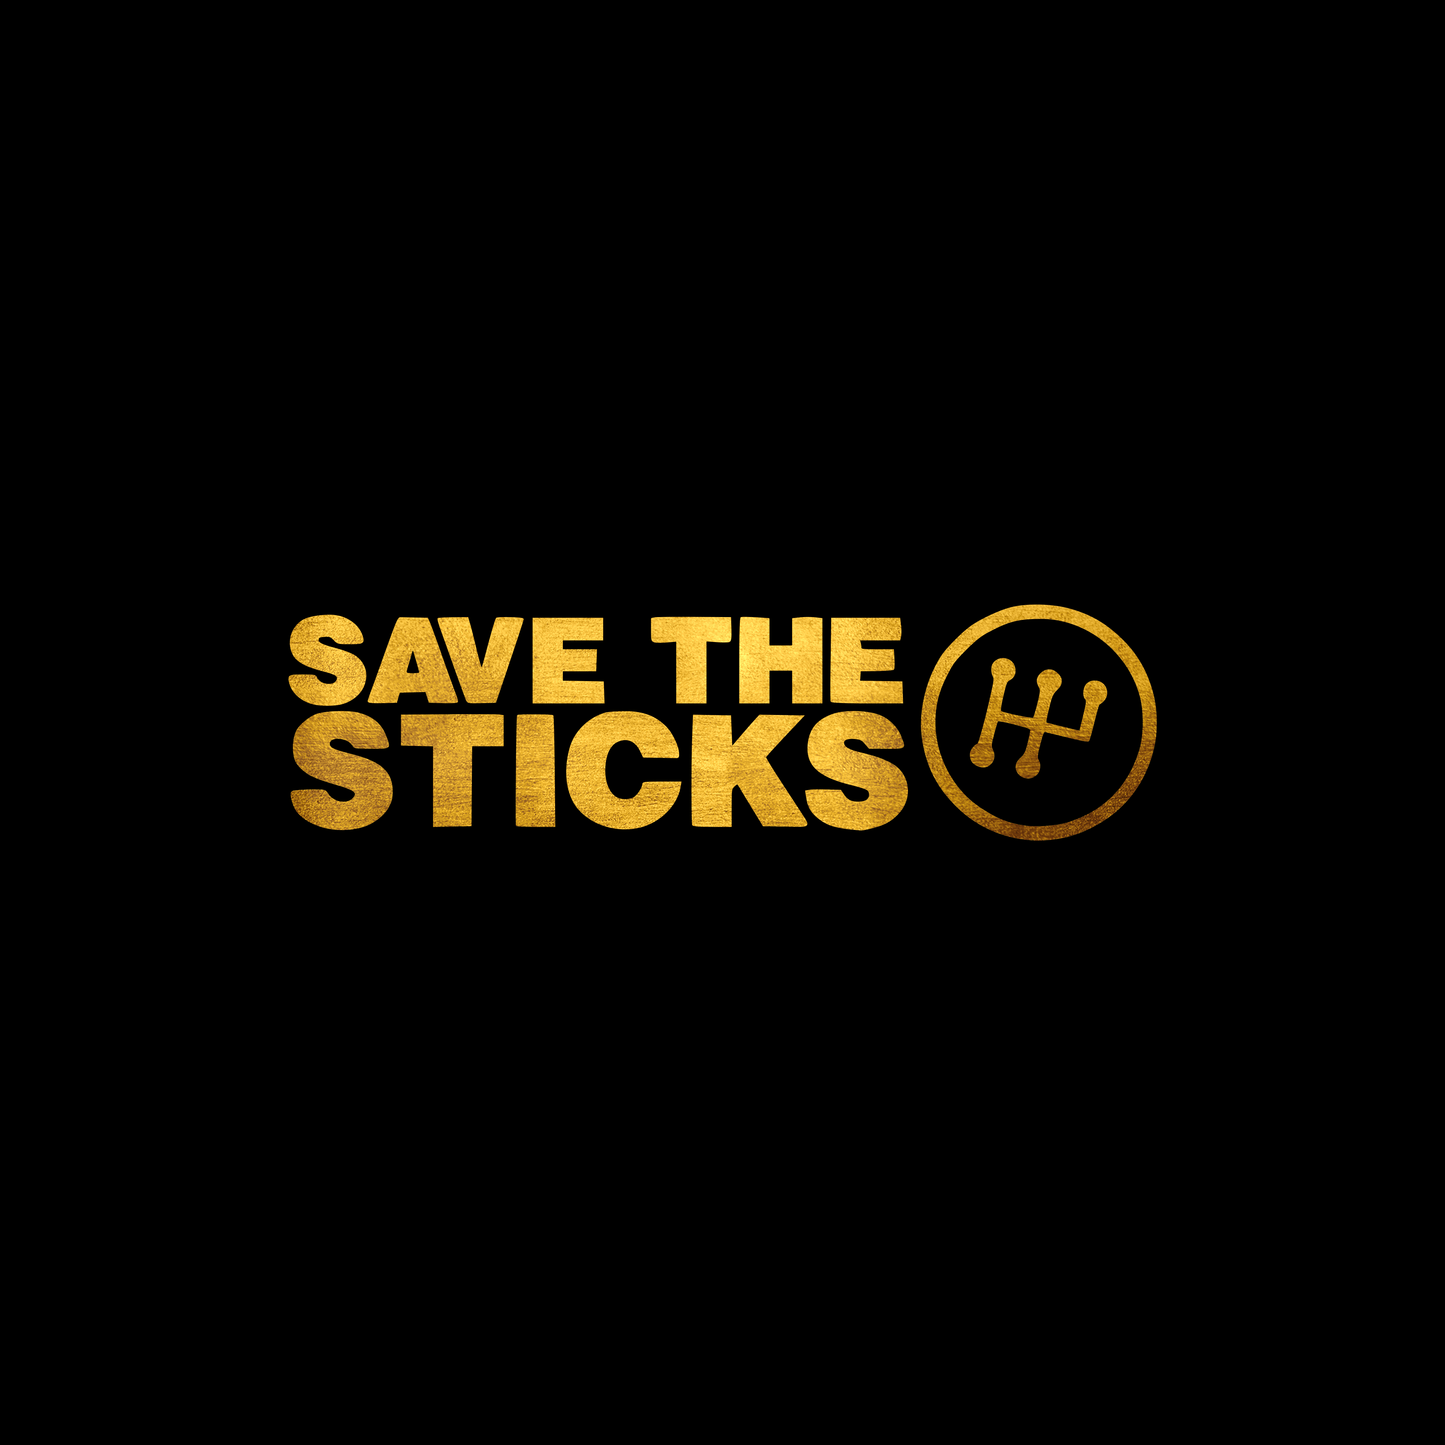 Save the sticks sticker decal